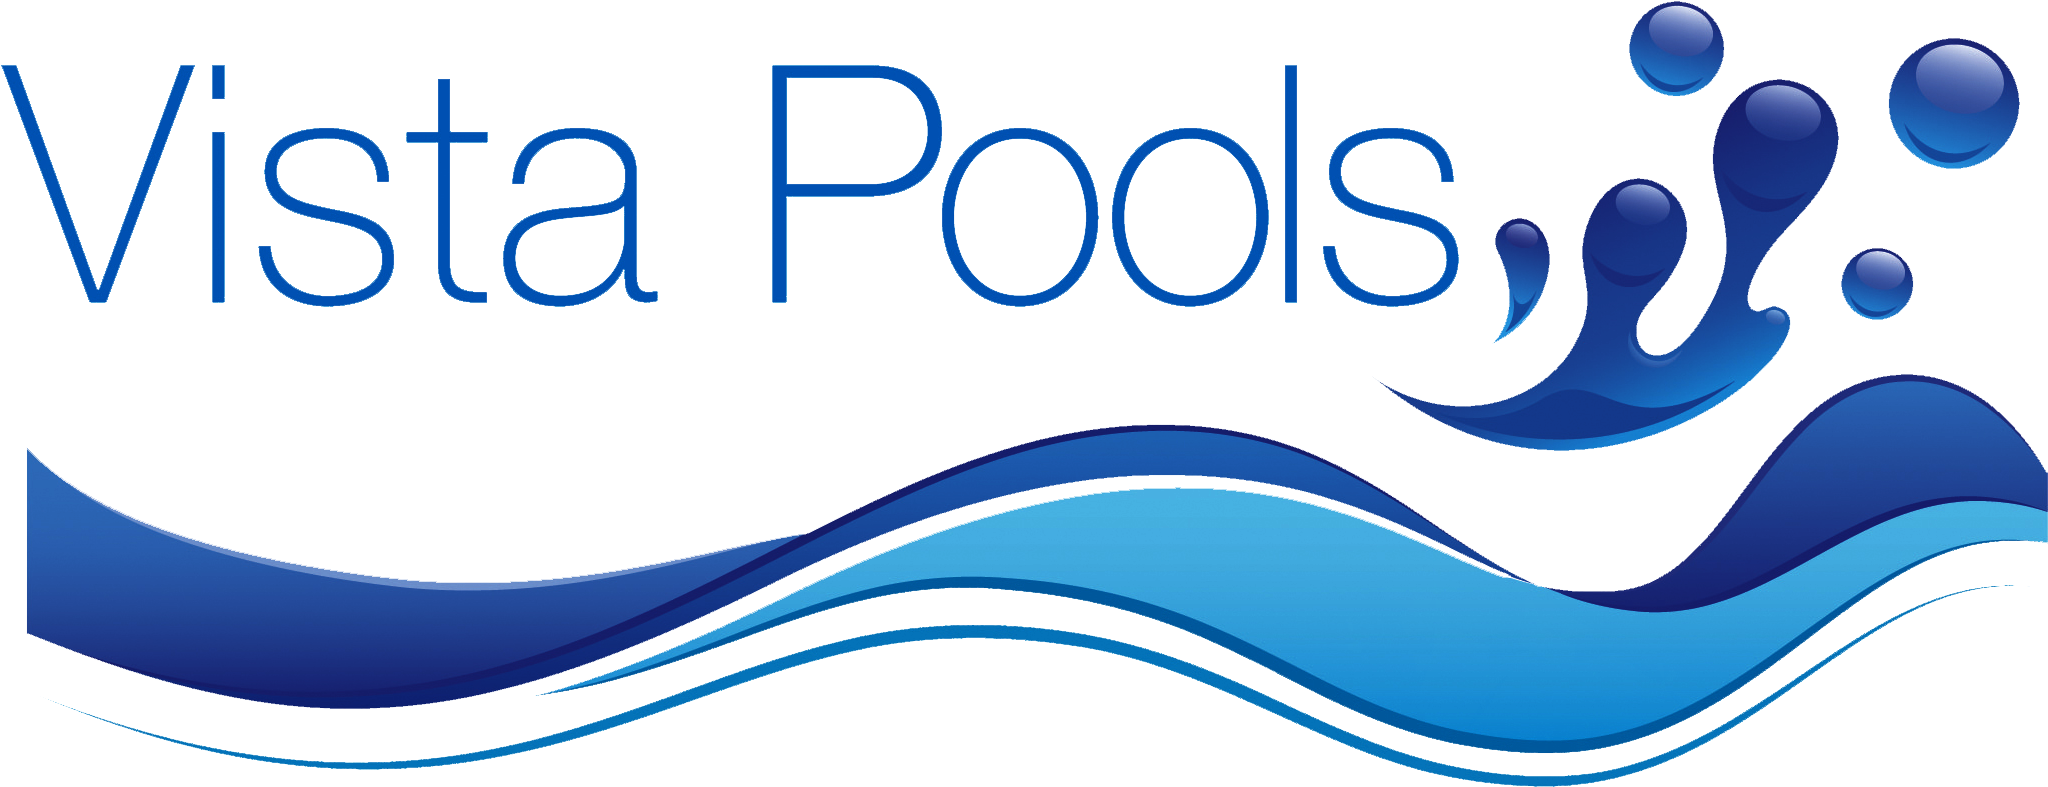 Swimming Pool Logos Clipart - Graphic Design (2047x1372)